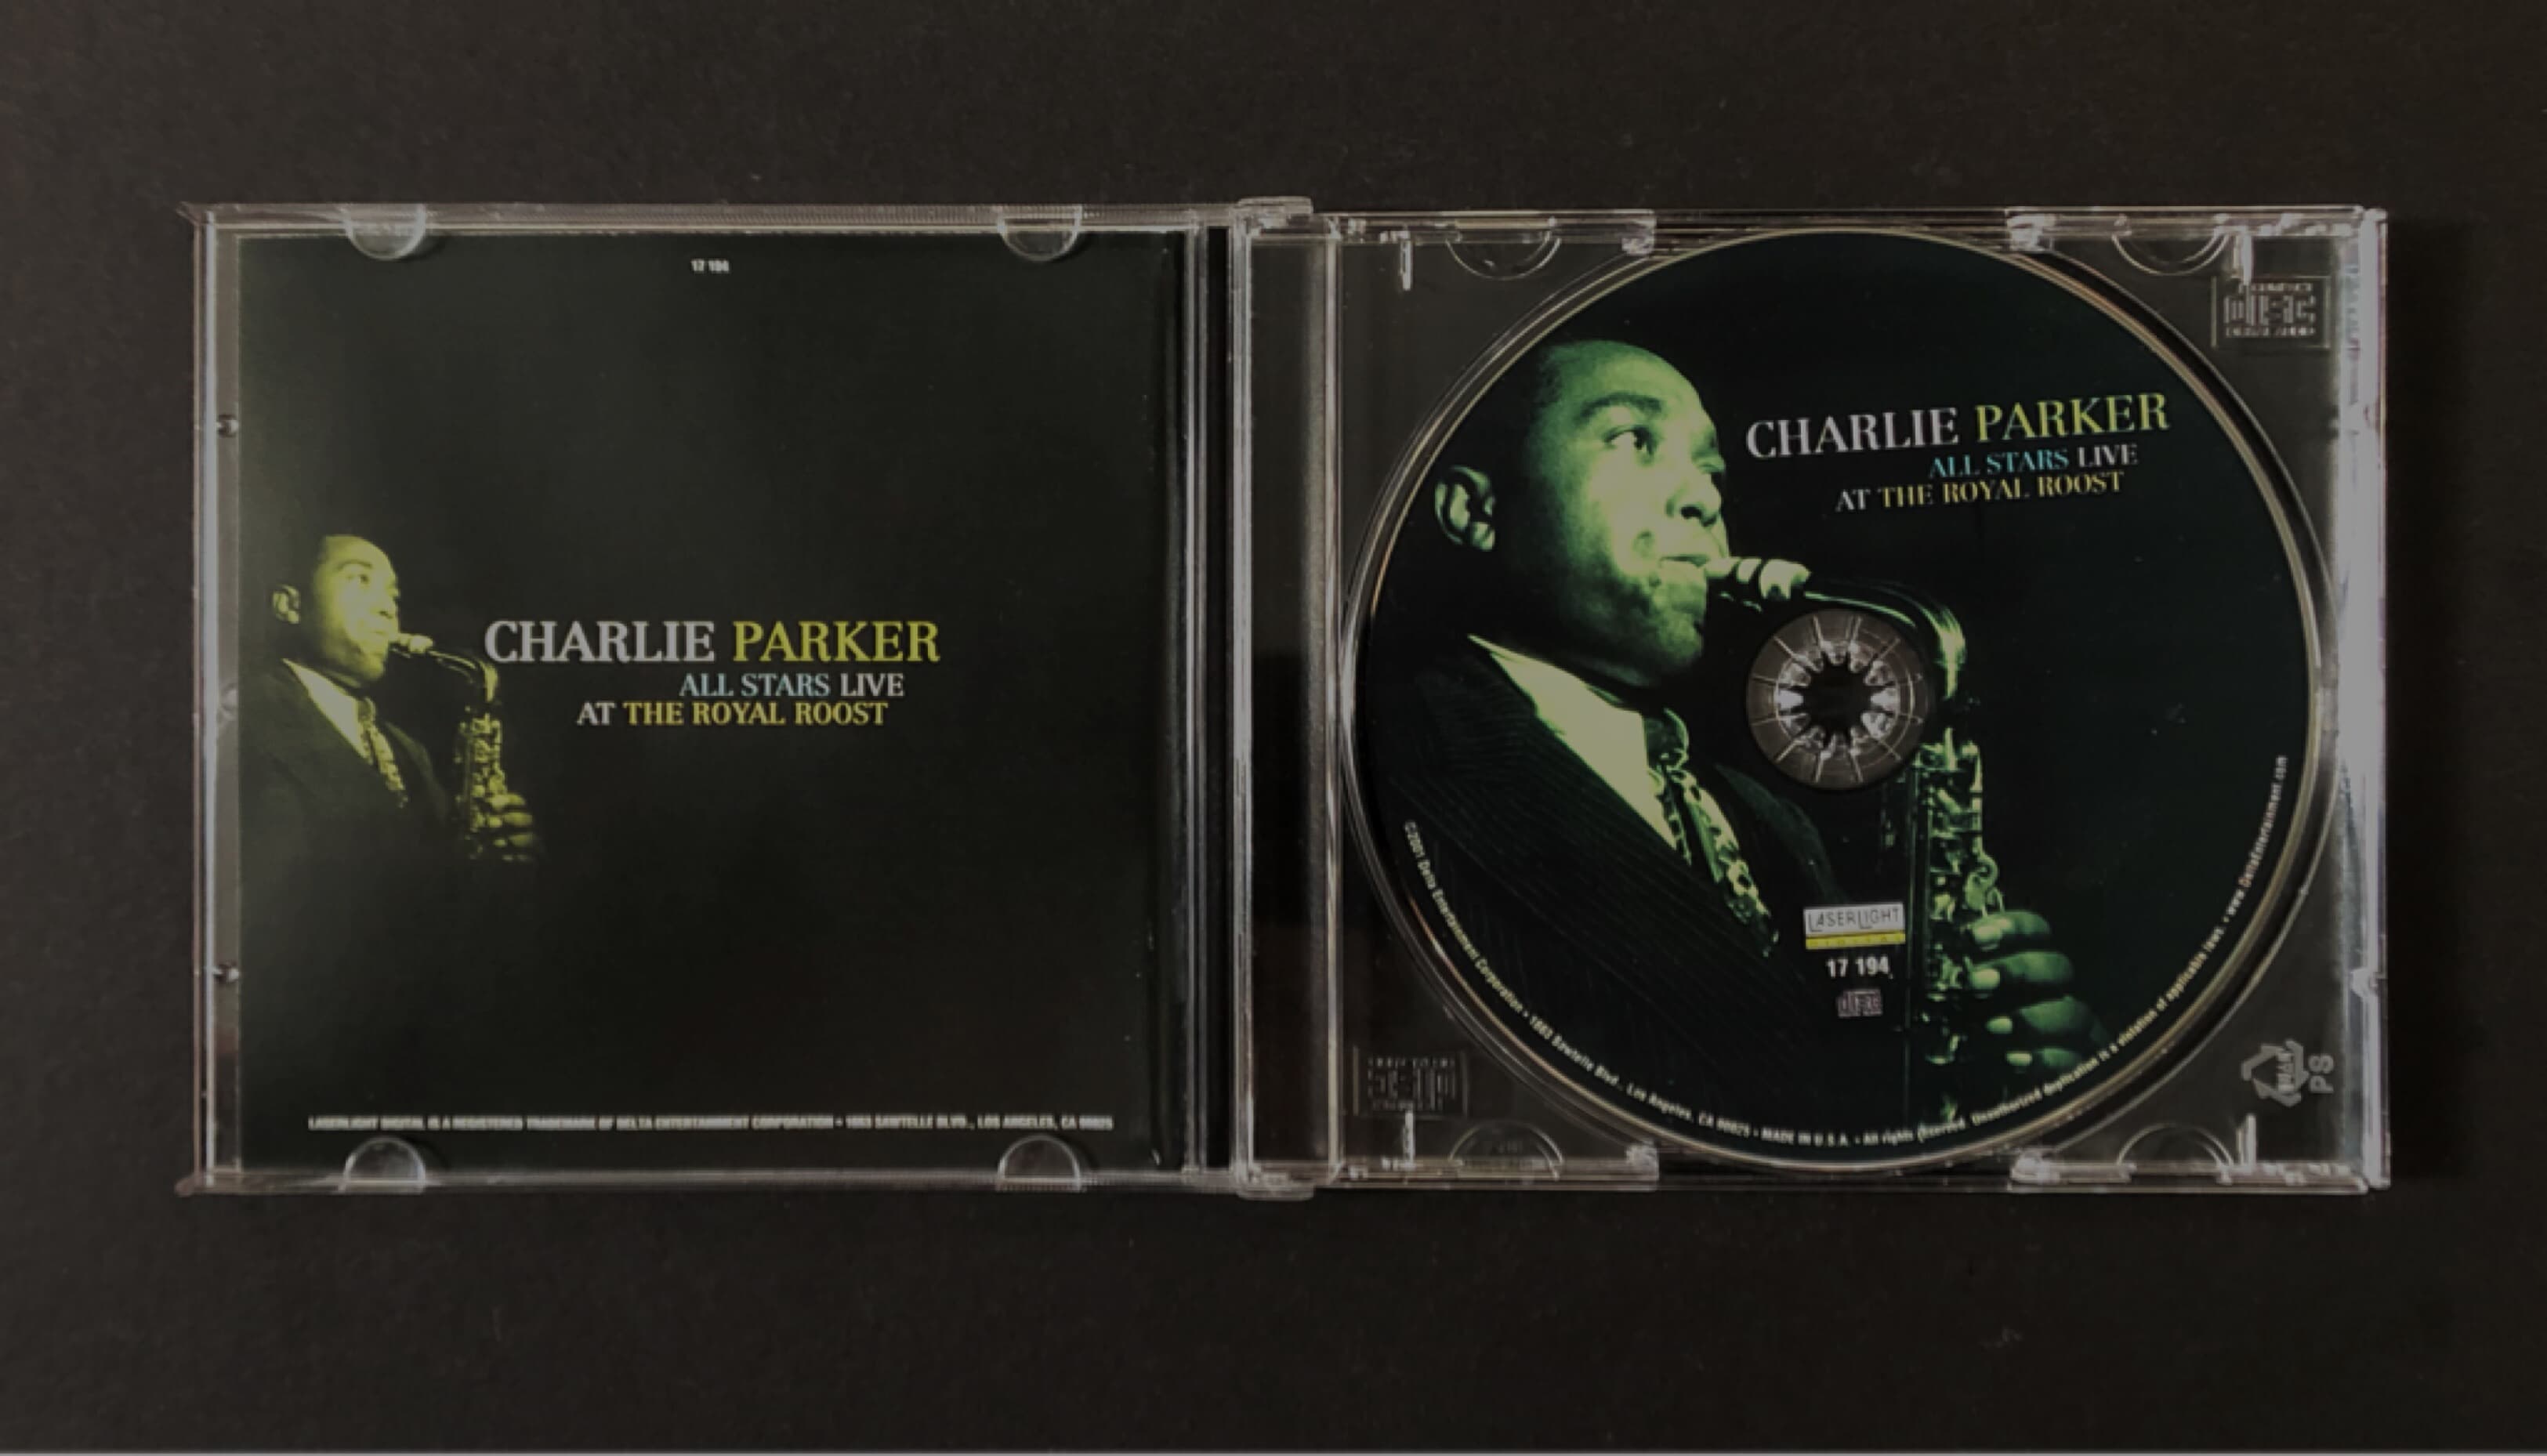 [CD] 수입반 CHARLIE PARKER- ALL STARS LIVE (US발매)